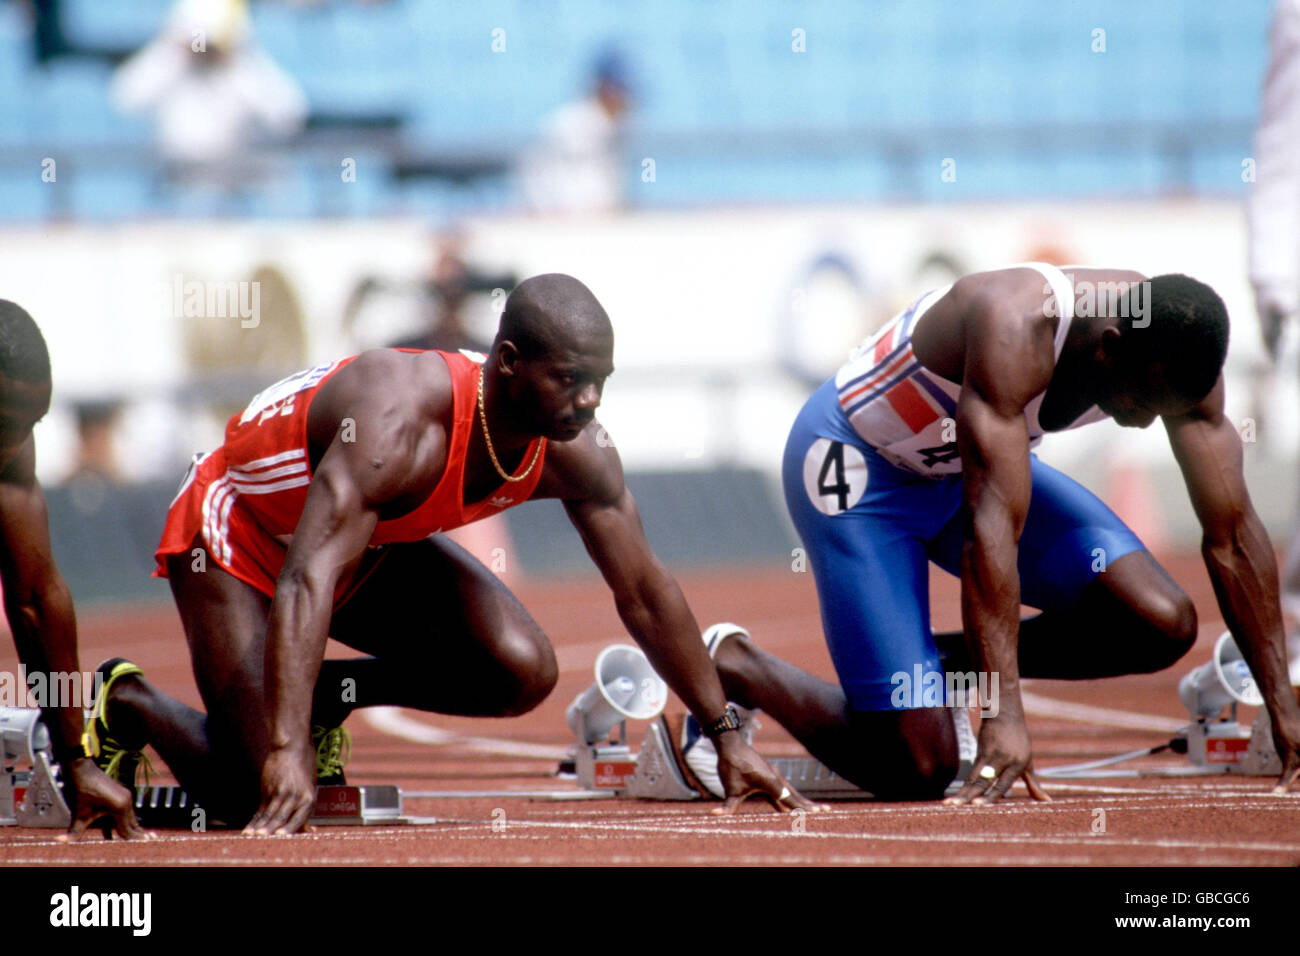 Athletics - Seoul Olympic Games 1988 - Men's 100m Stock Photo